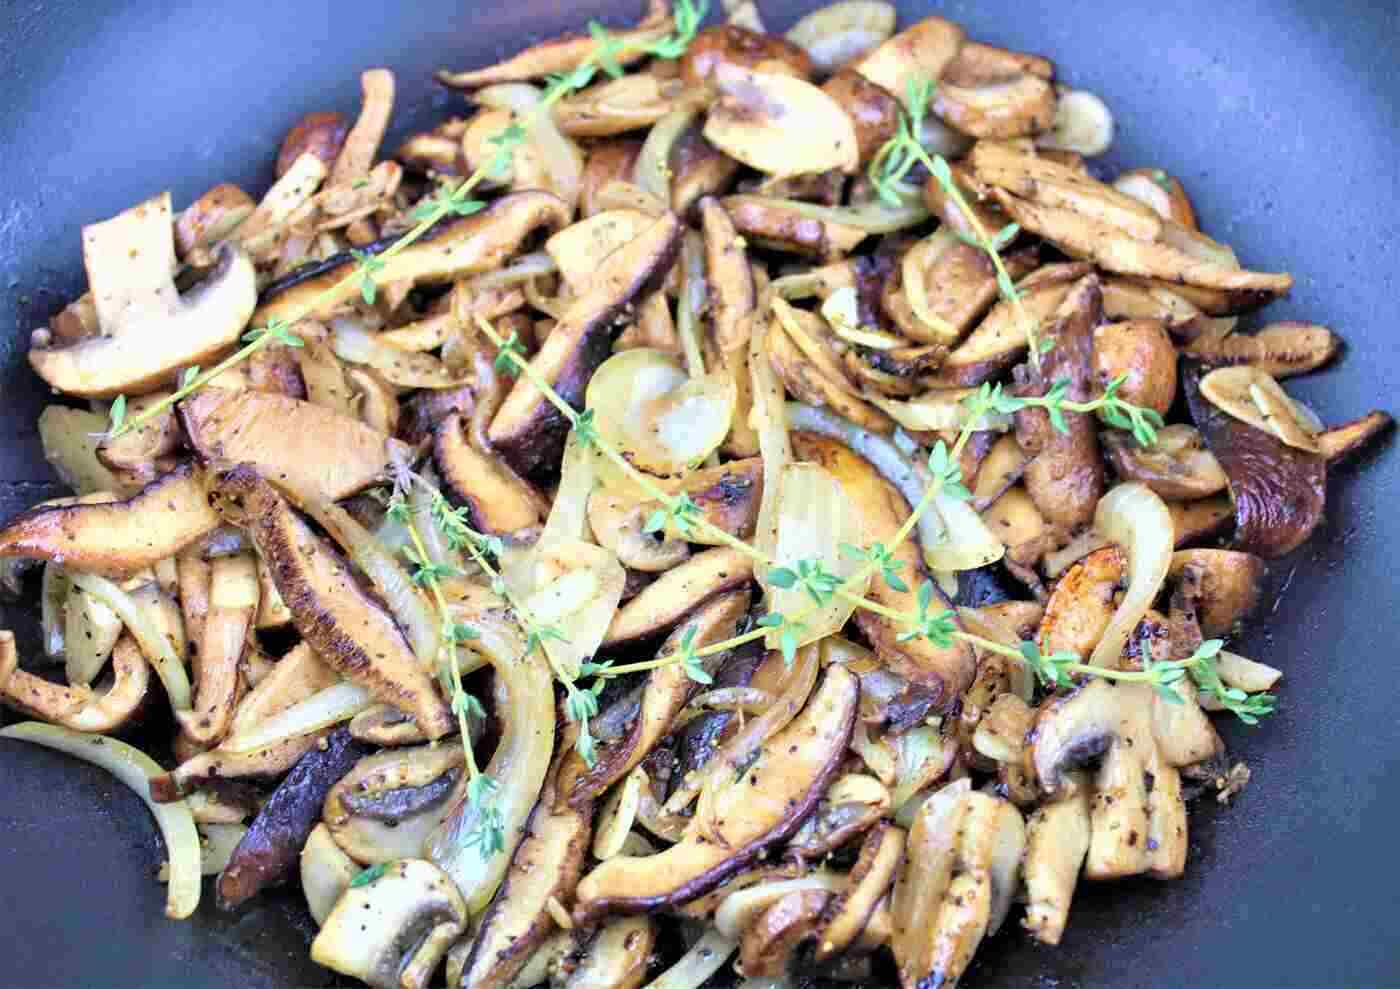 mushrooms cooking - vegetarian mushroom stroganoff recipe